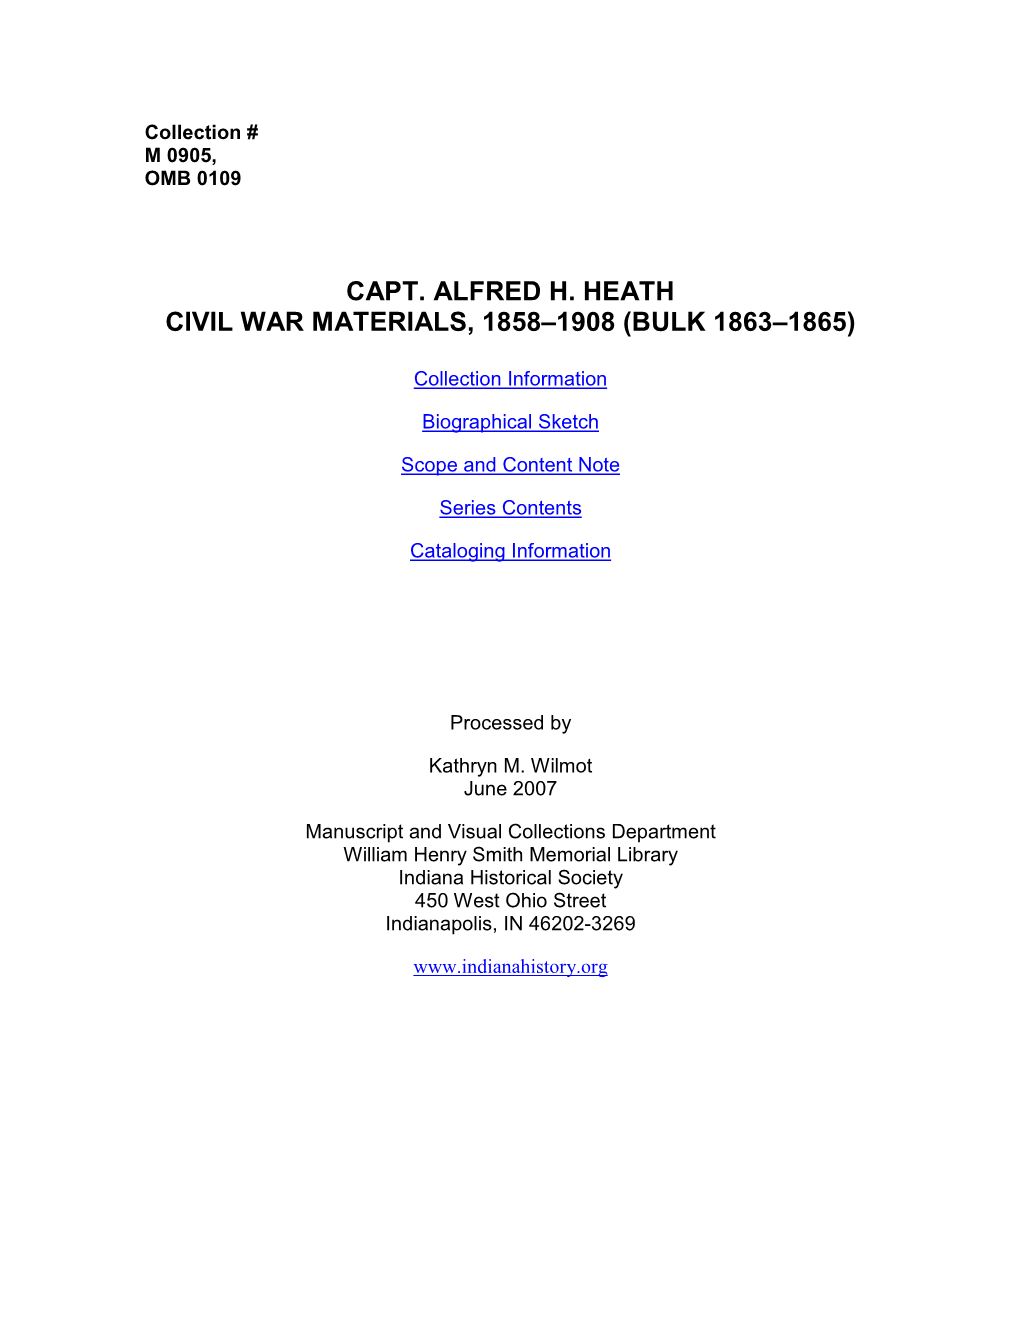 Capt. Alfred H. Heath Civil War Materials, 1858–1908 (Bulk 1863–1865)